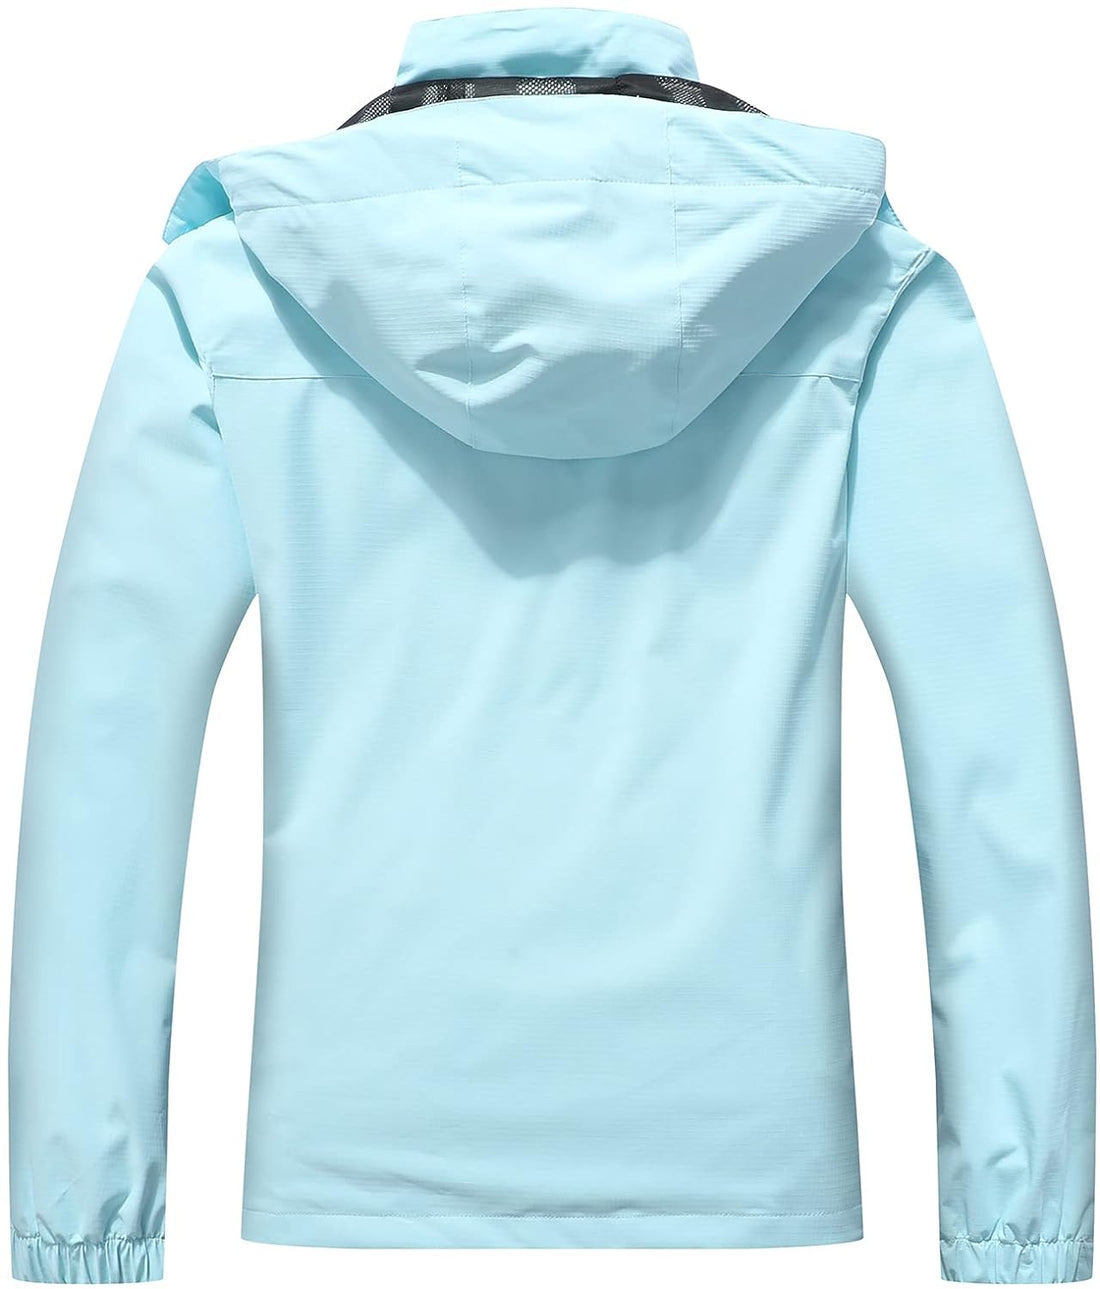 MOERDENG Women's Waterproof Rain Jacket Outdoor Lightweight Softshell Raincoat for Hiking Travel